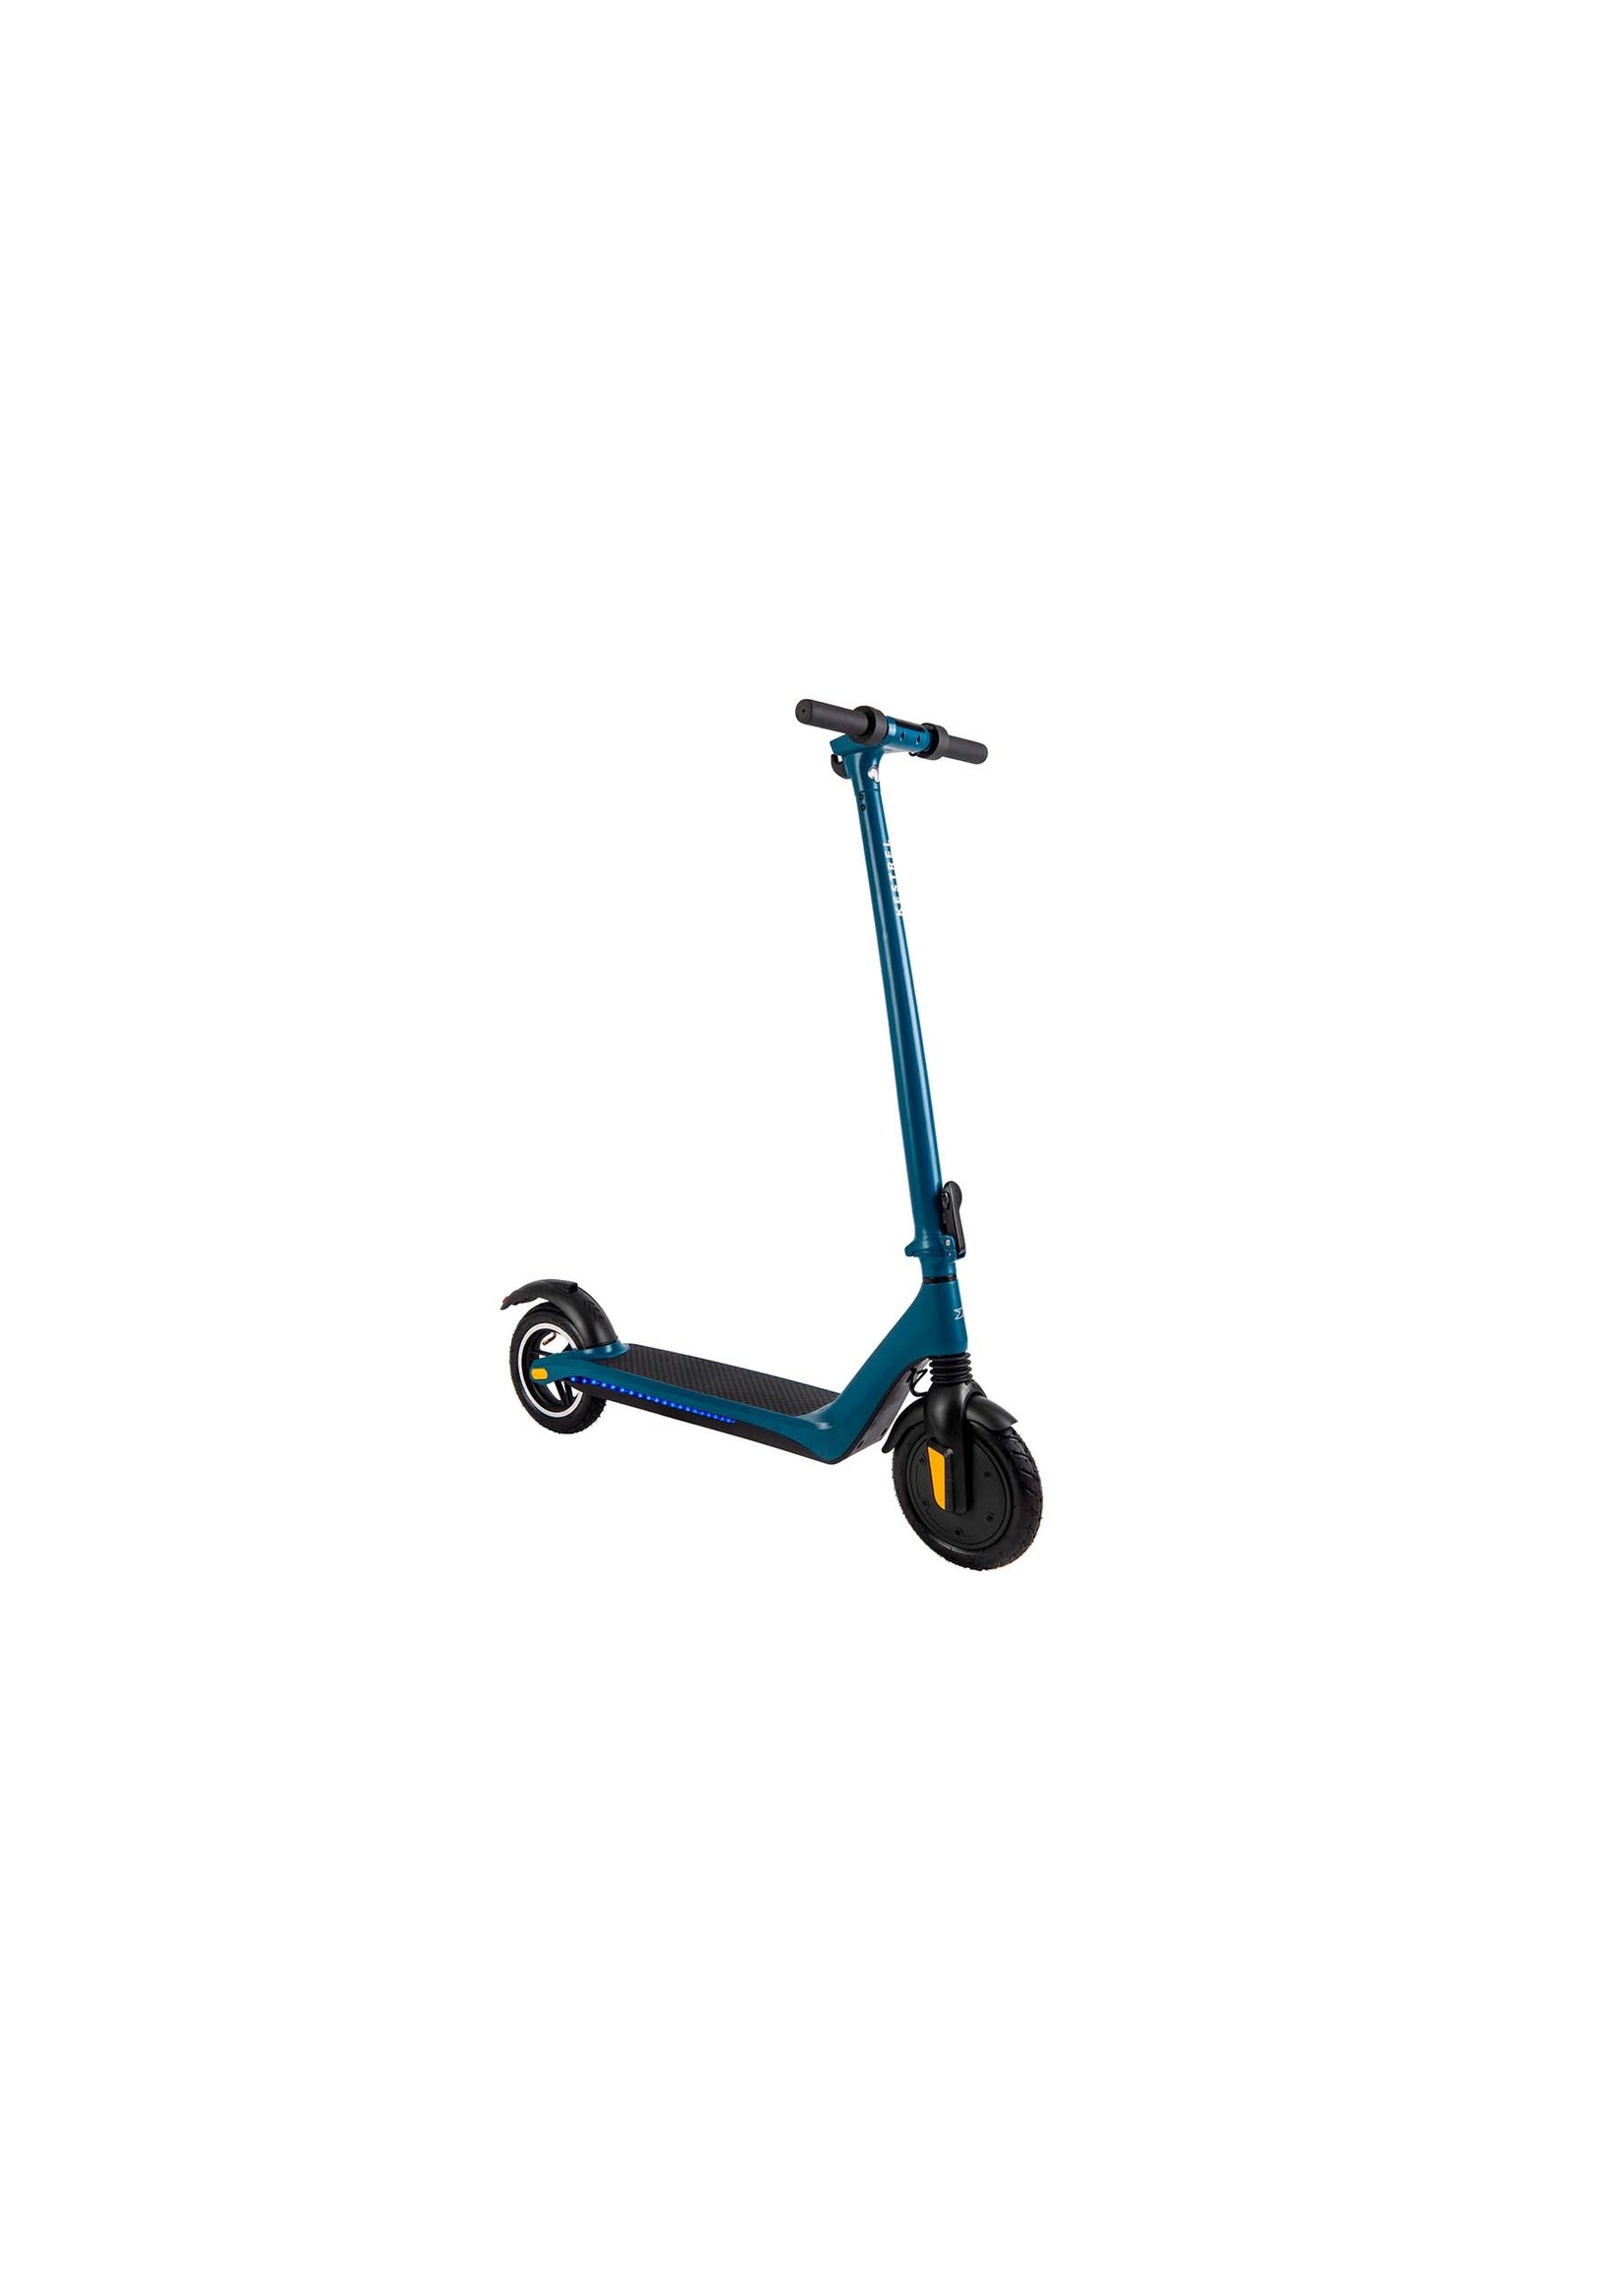 Kestrel Electric Scooter